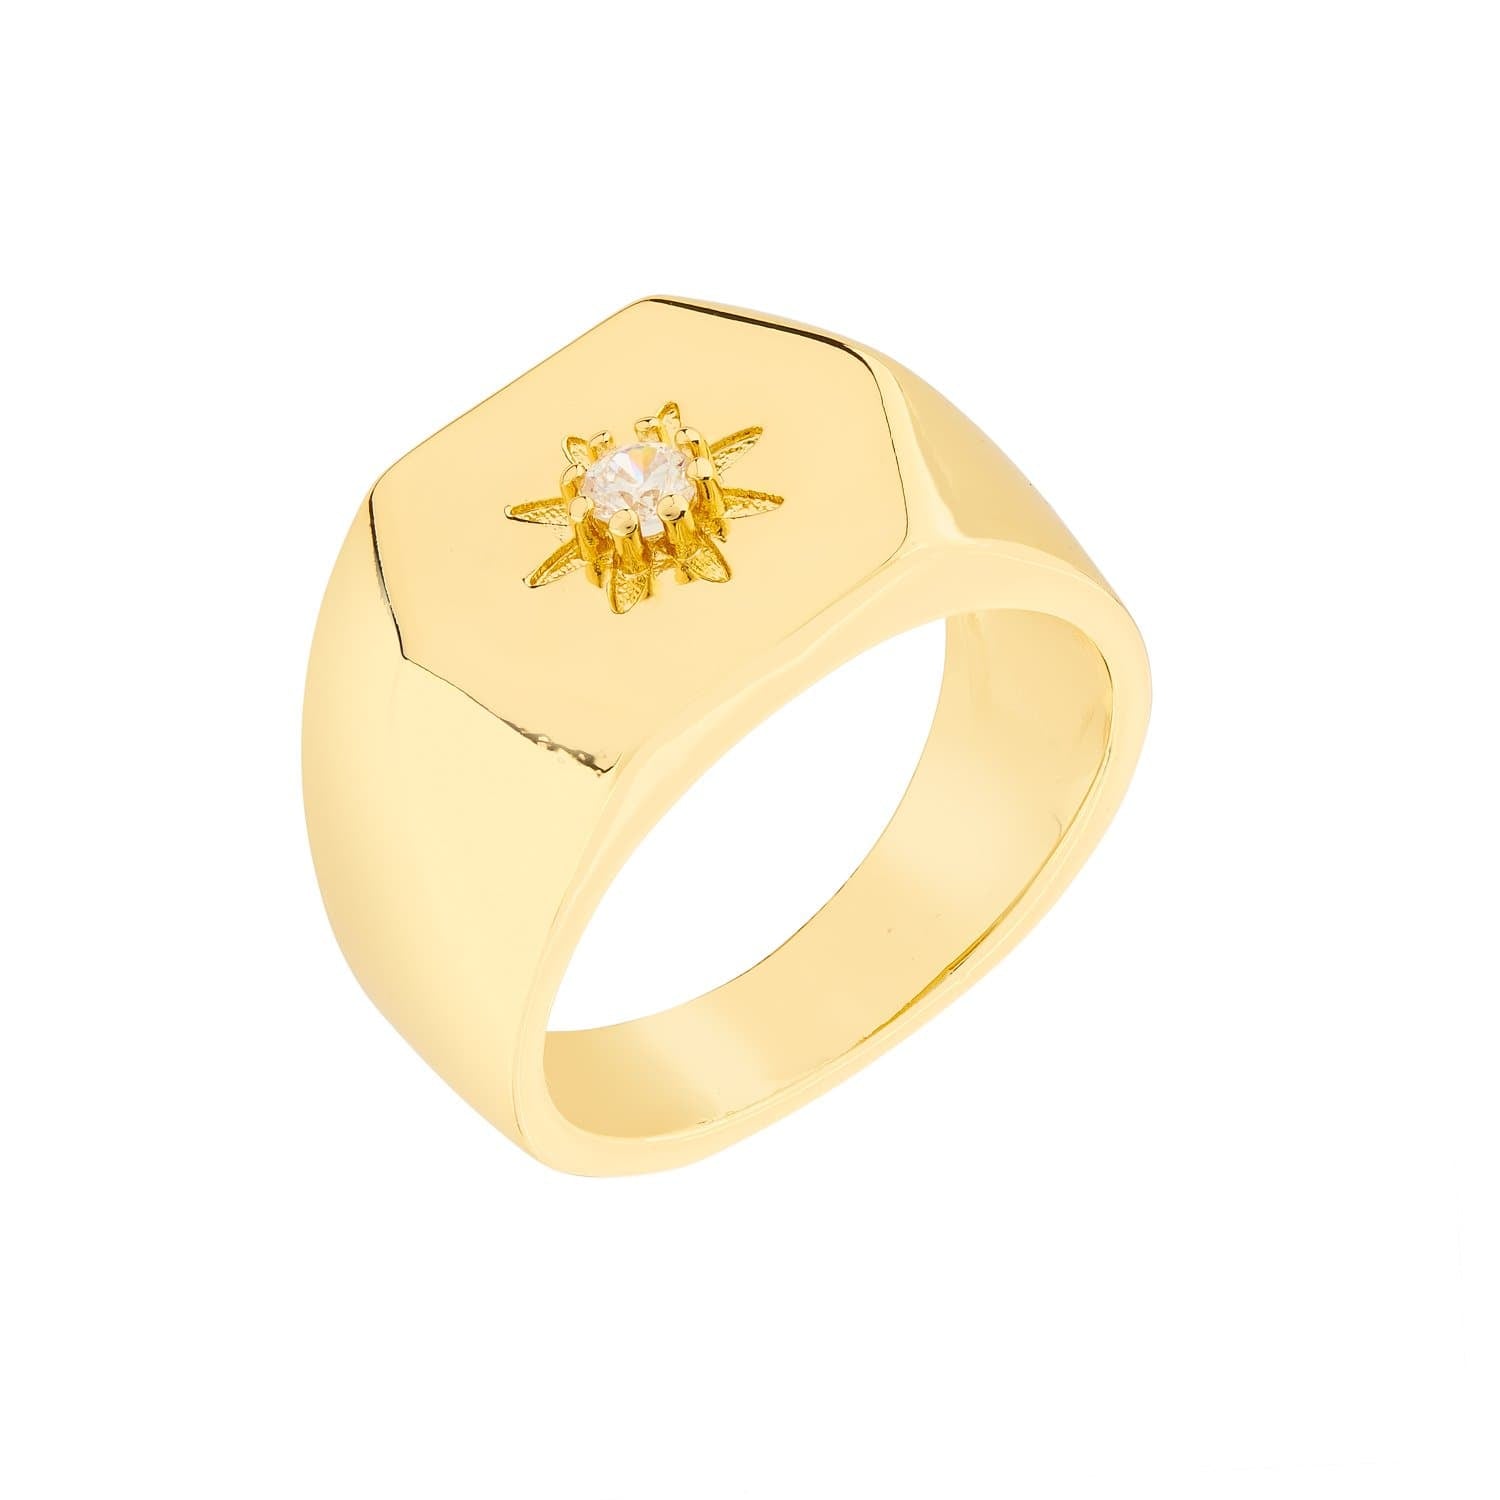 Queen's Sun Ring - Gold